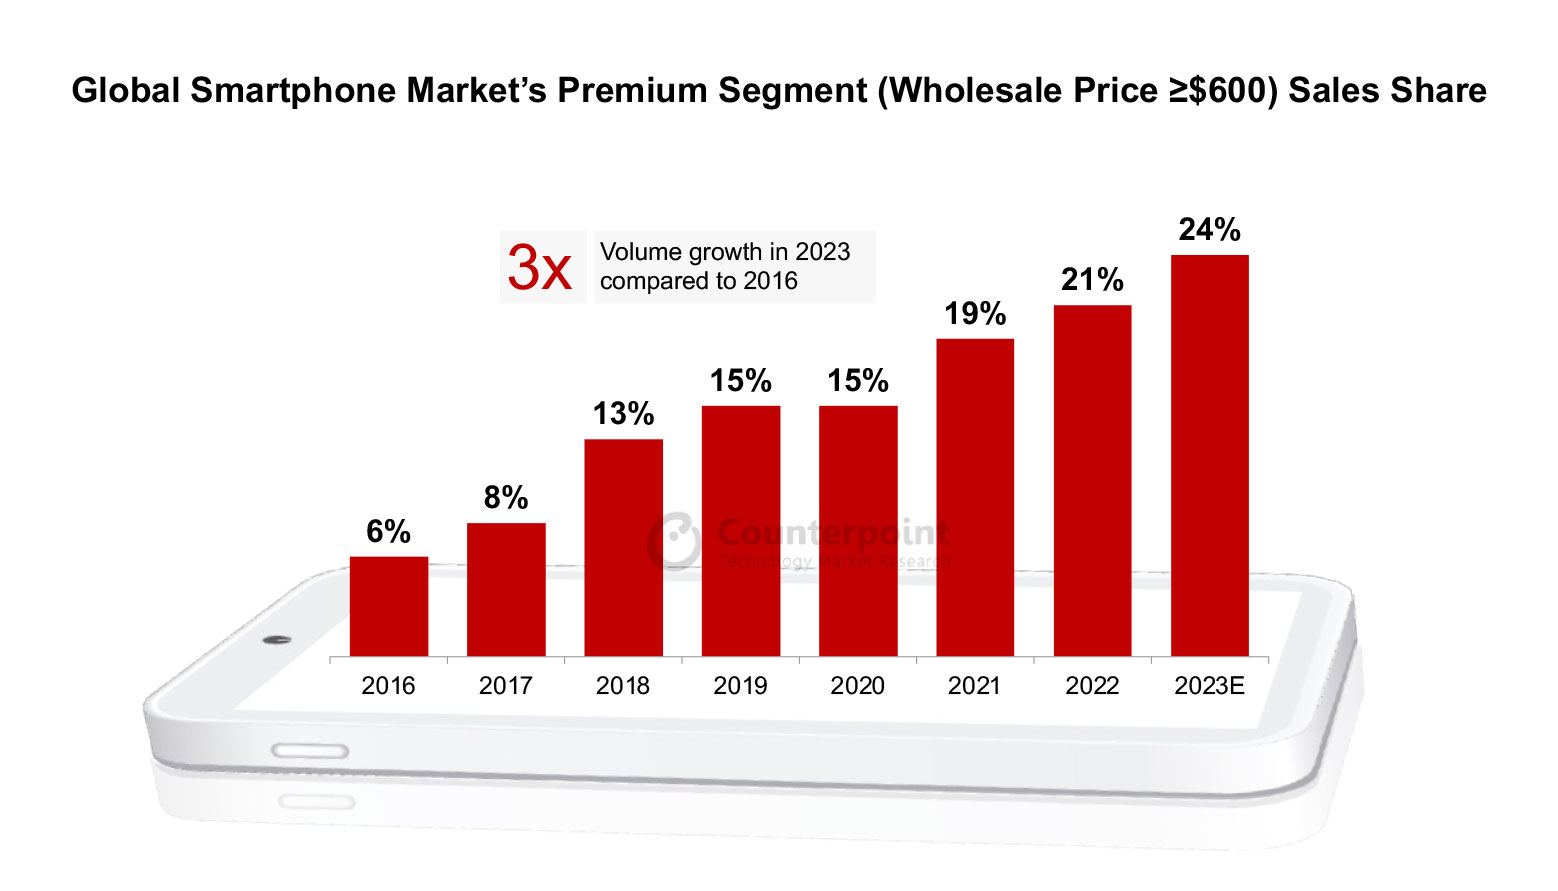 Global Smartphone Markets Premium Segment Sales Share